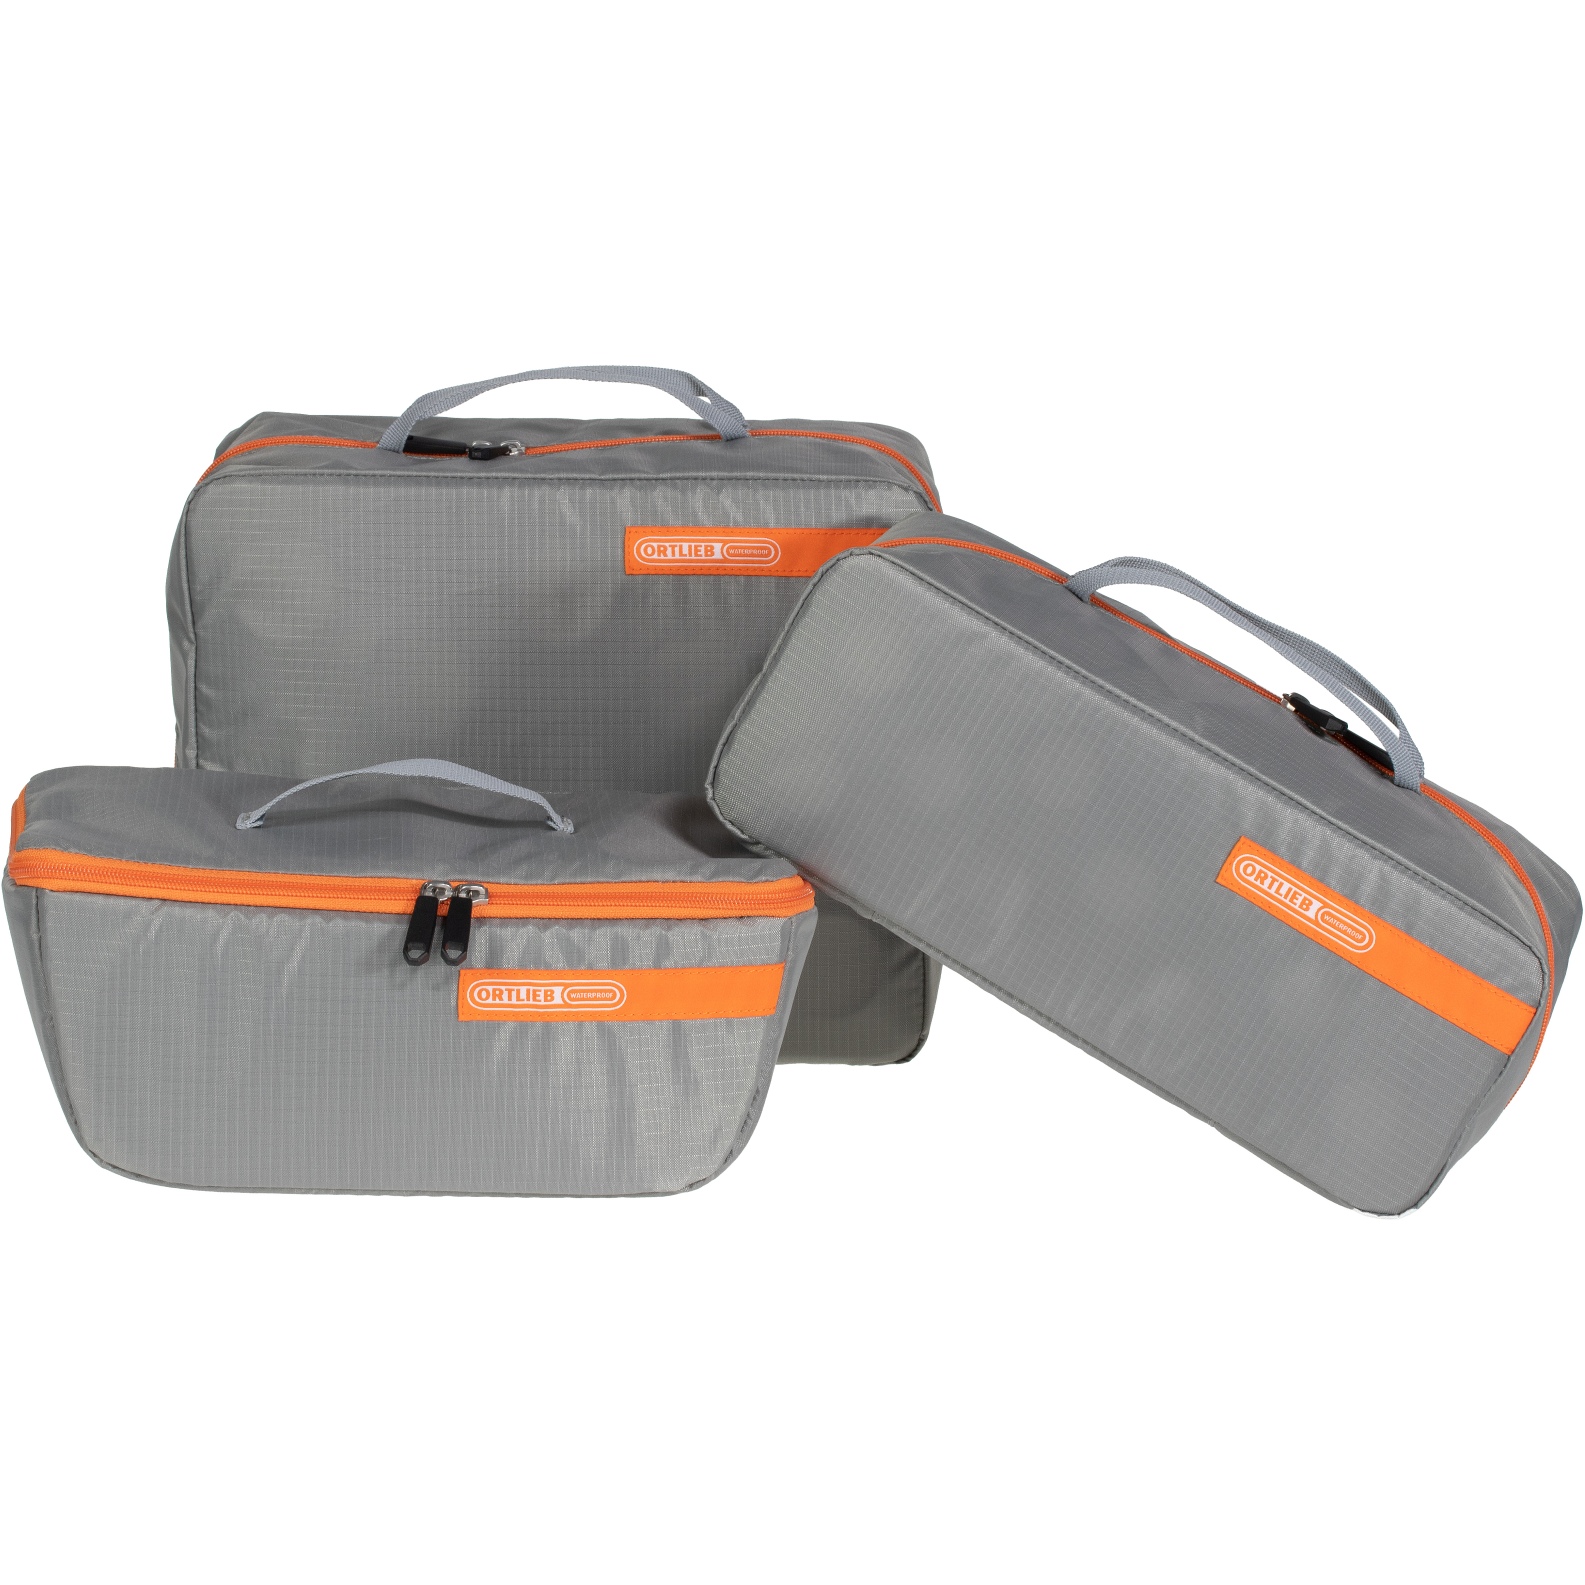 Productfoto van ORTLIEB Packing Cube Bundle - Verpakkingskubus Set - grijs